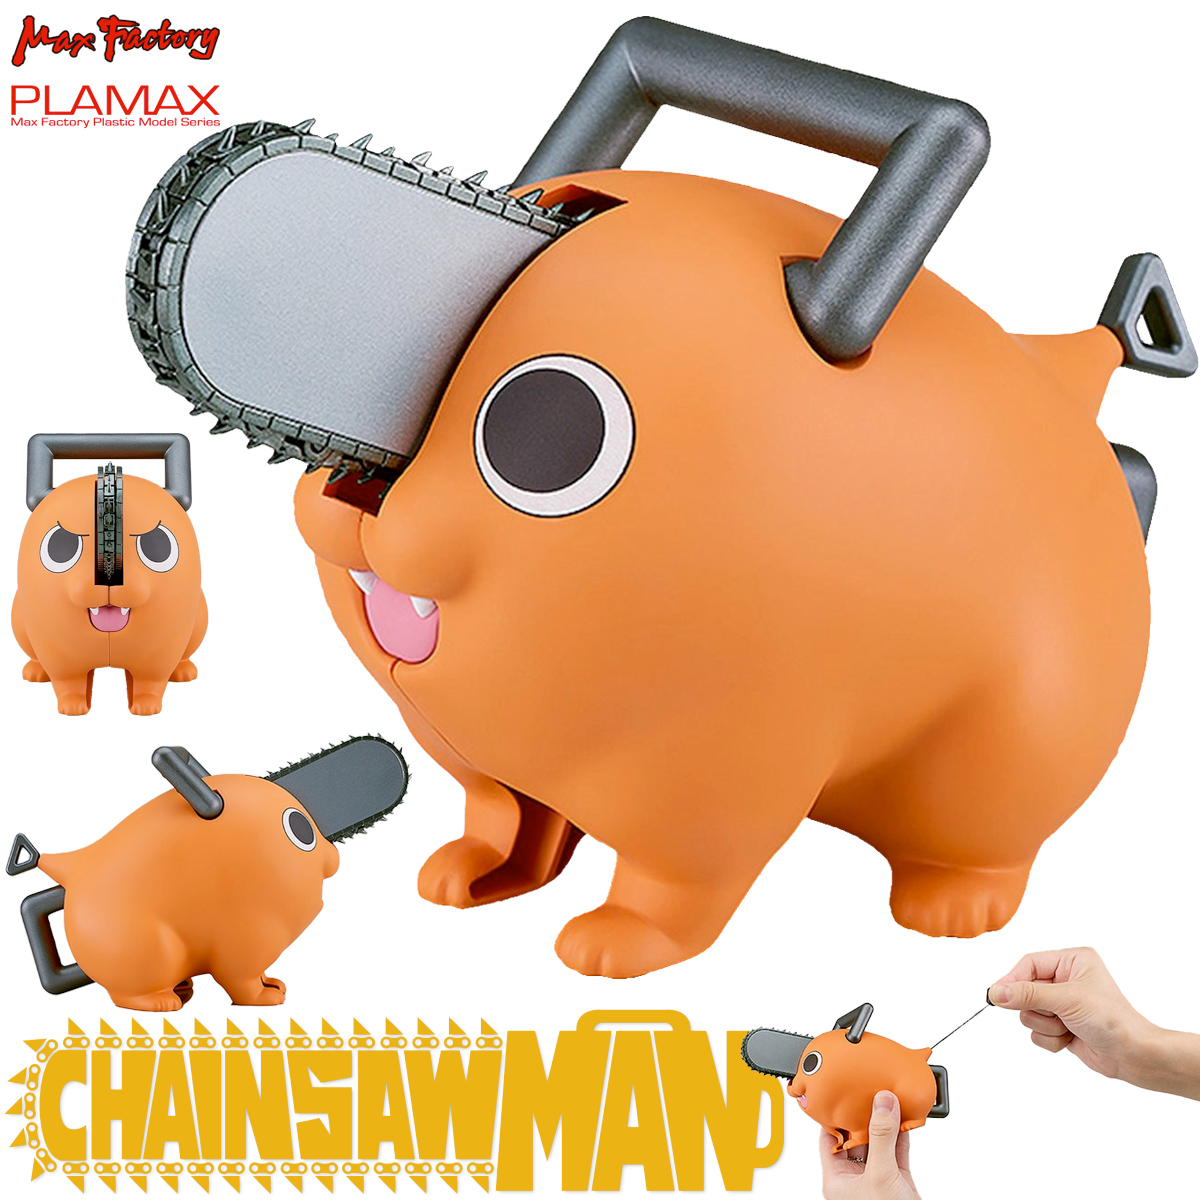 Figura Pochita Plamax Chainsaw Man com Motosserra que Gira